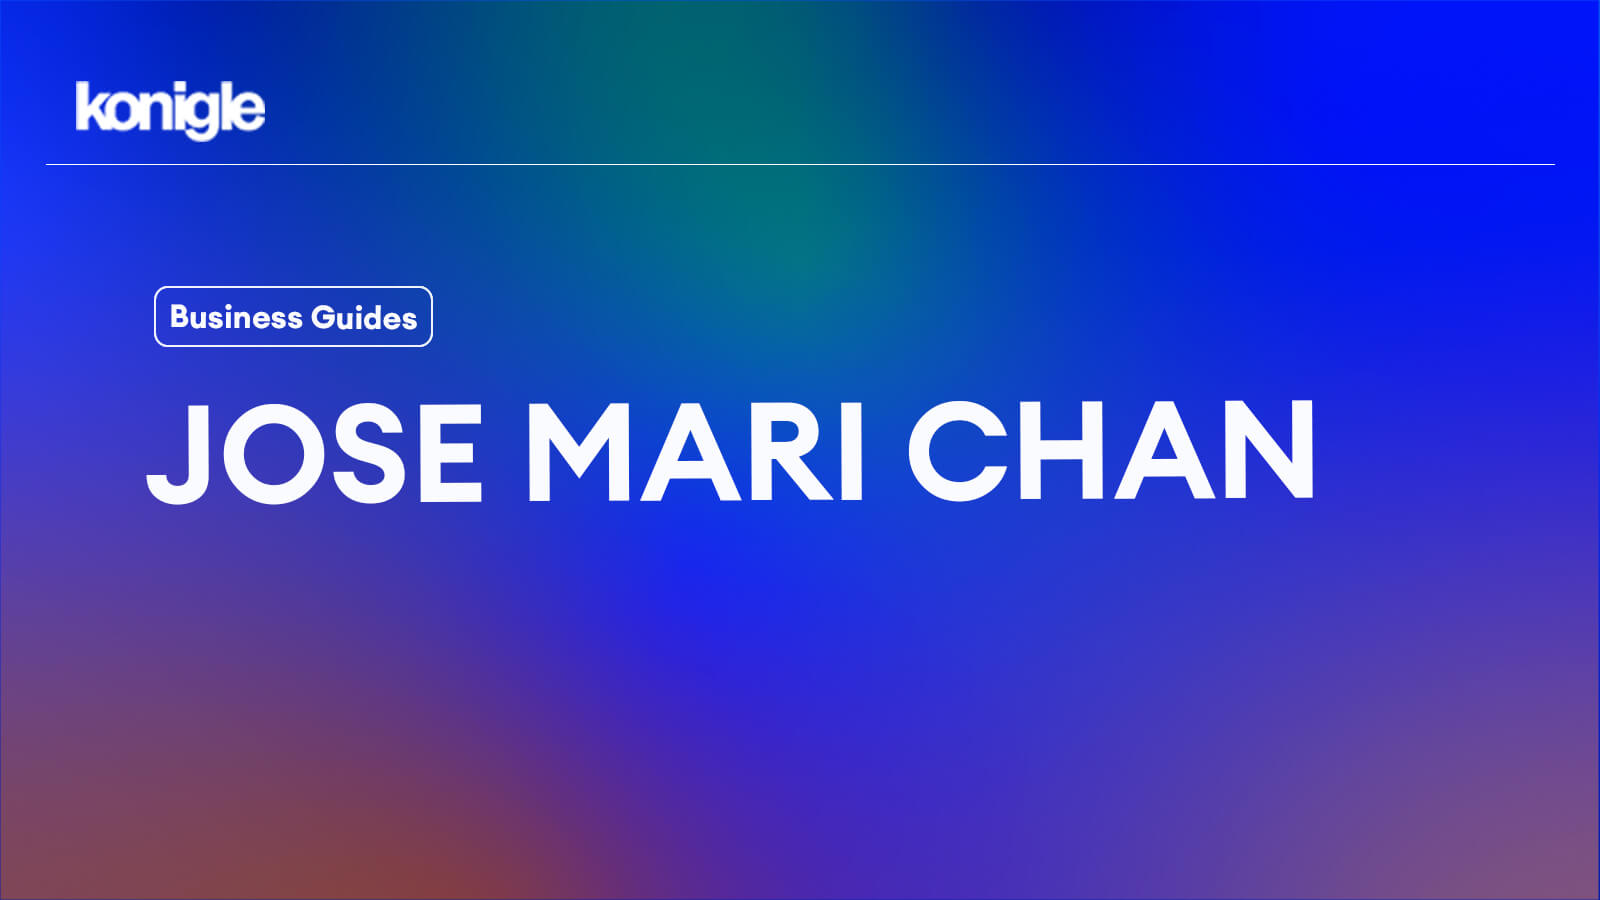 Jose Mari Chan